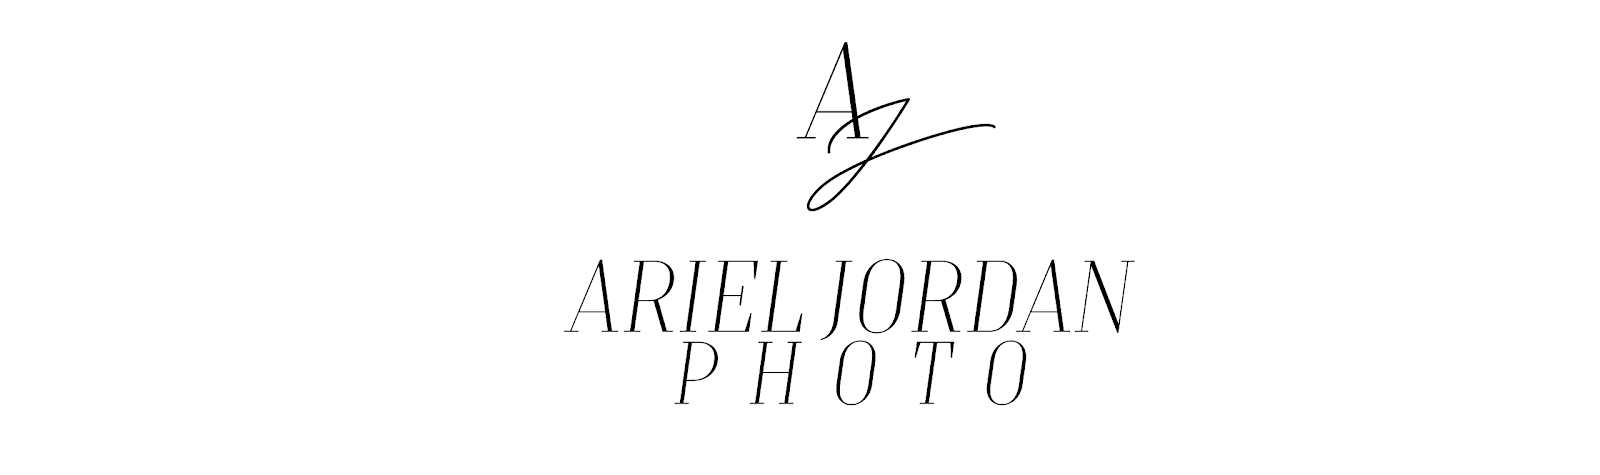 ariel jordan photography